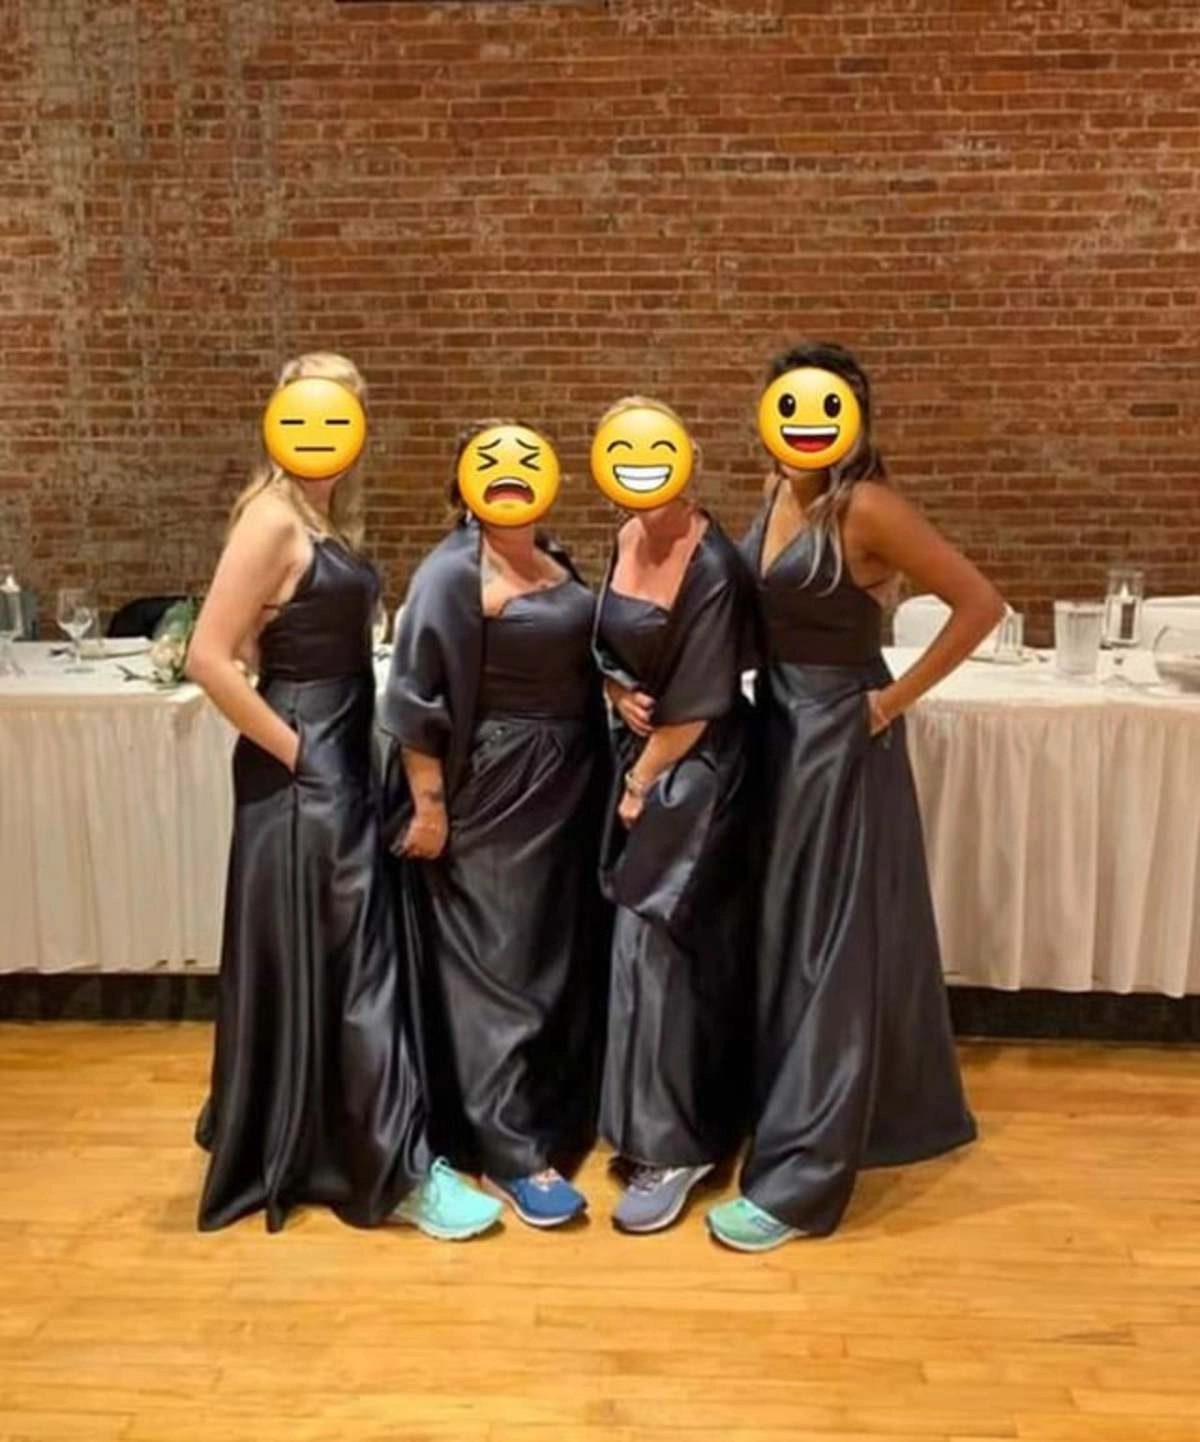 Reddit bridesmaid dresses